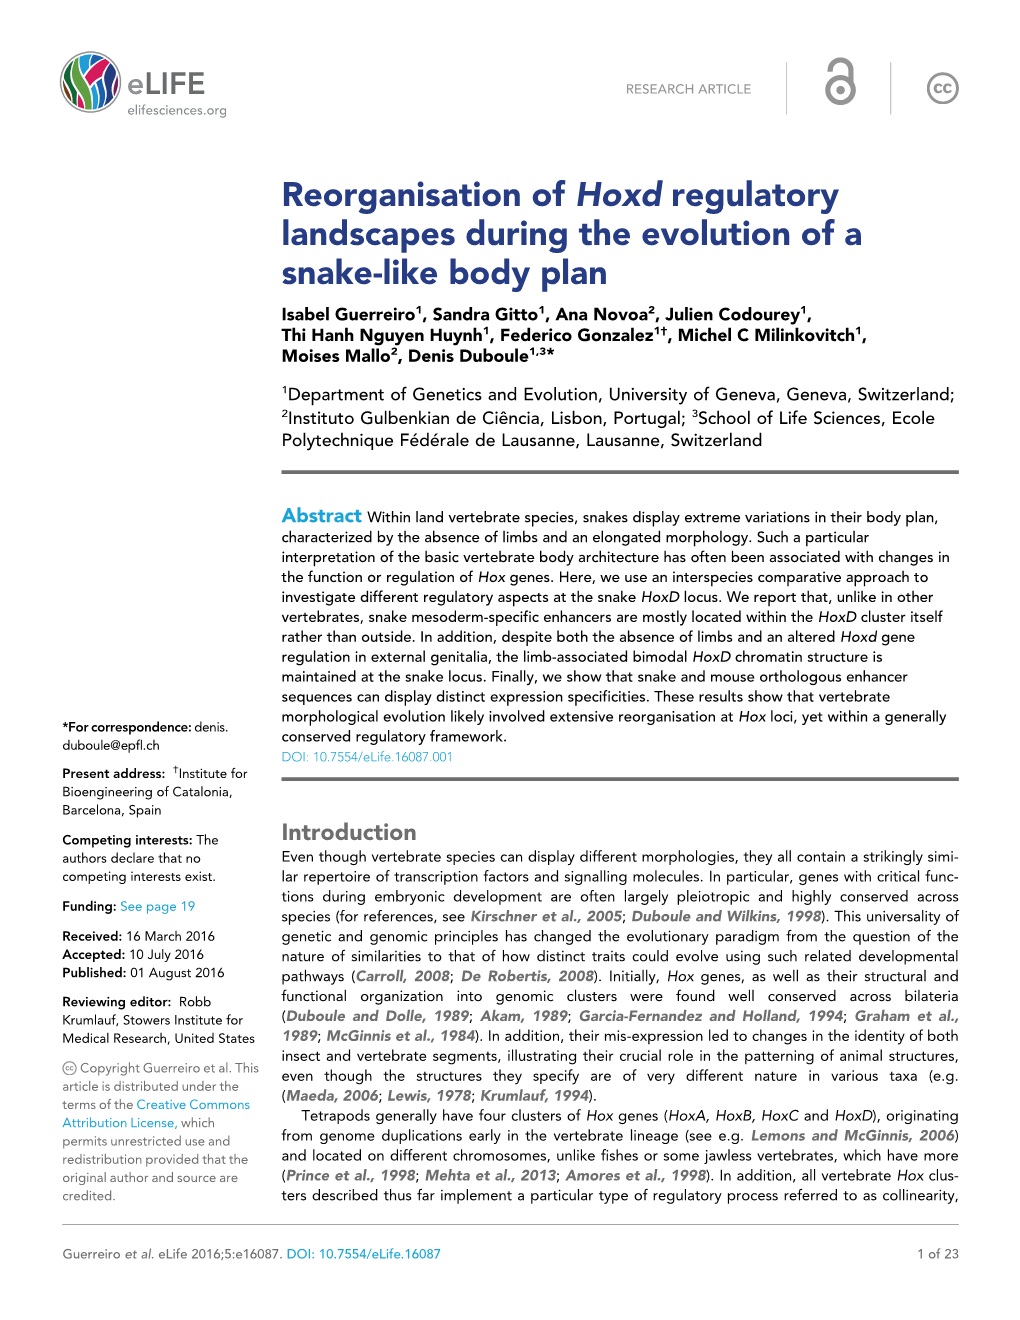 Reorganisation of Hoxd Regulatory Landscapes During the Evolution Of